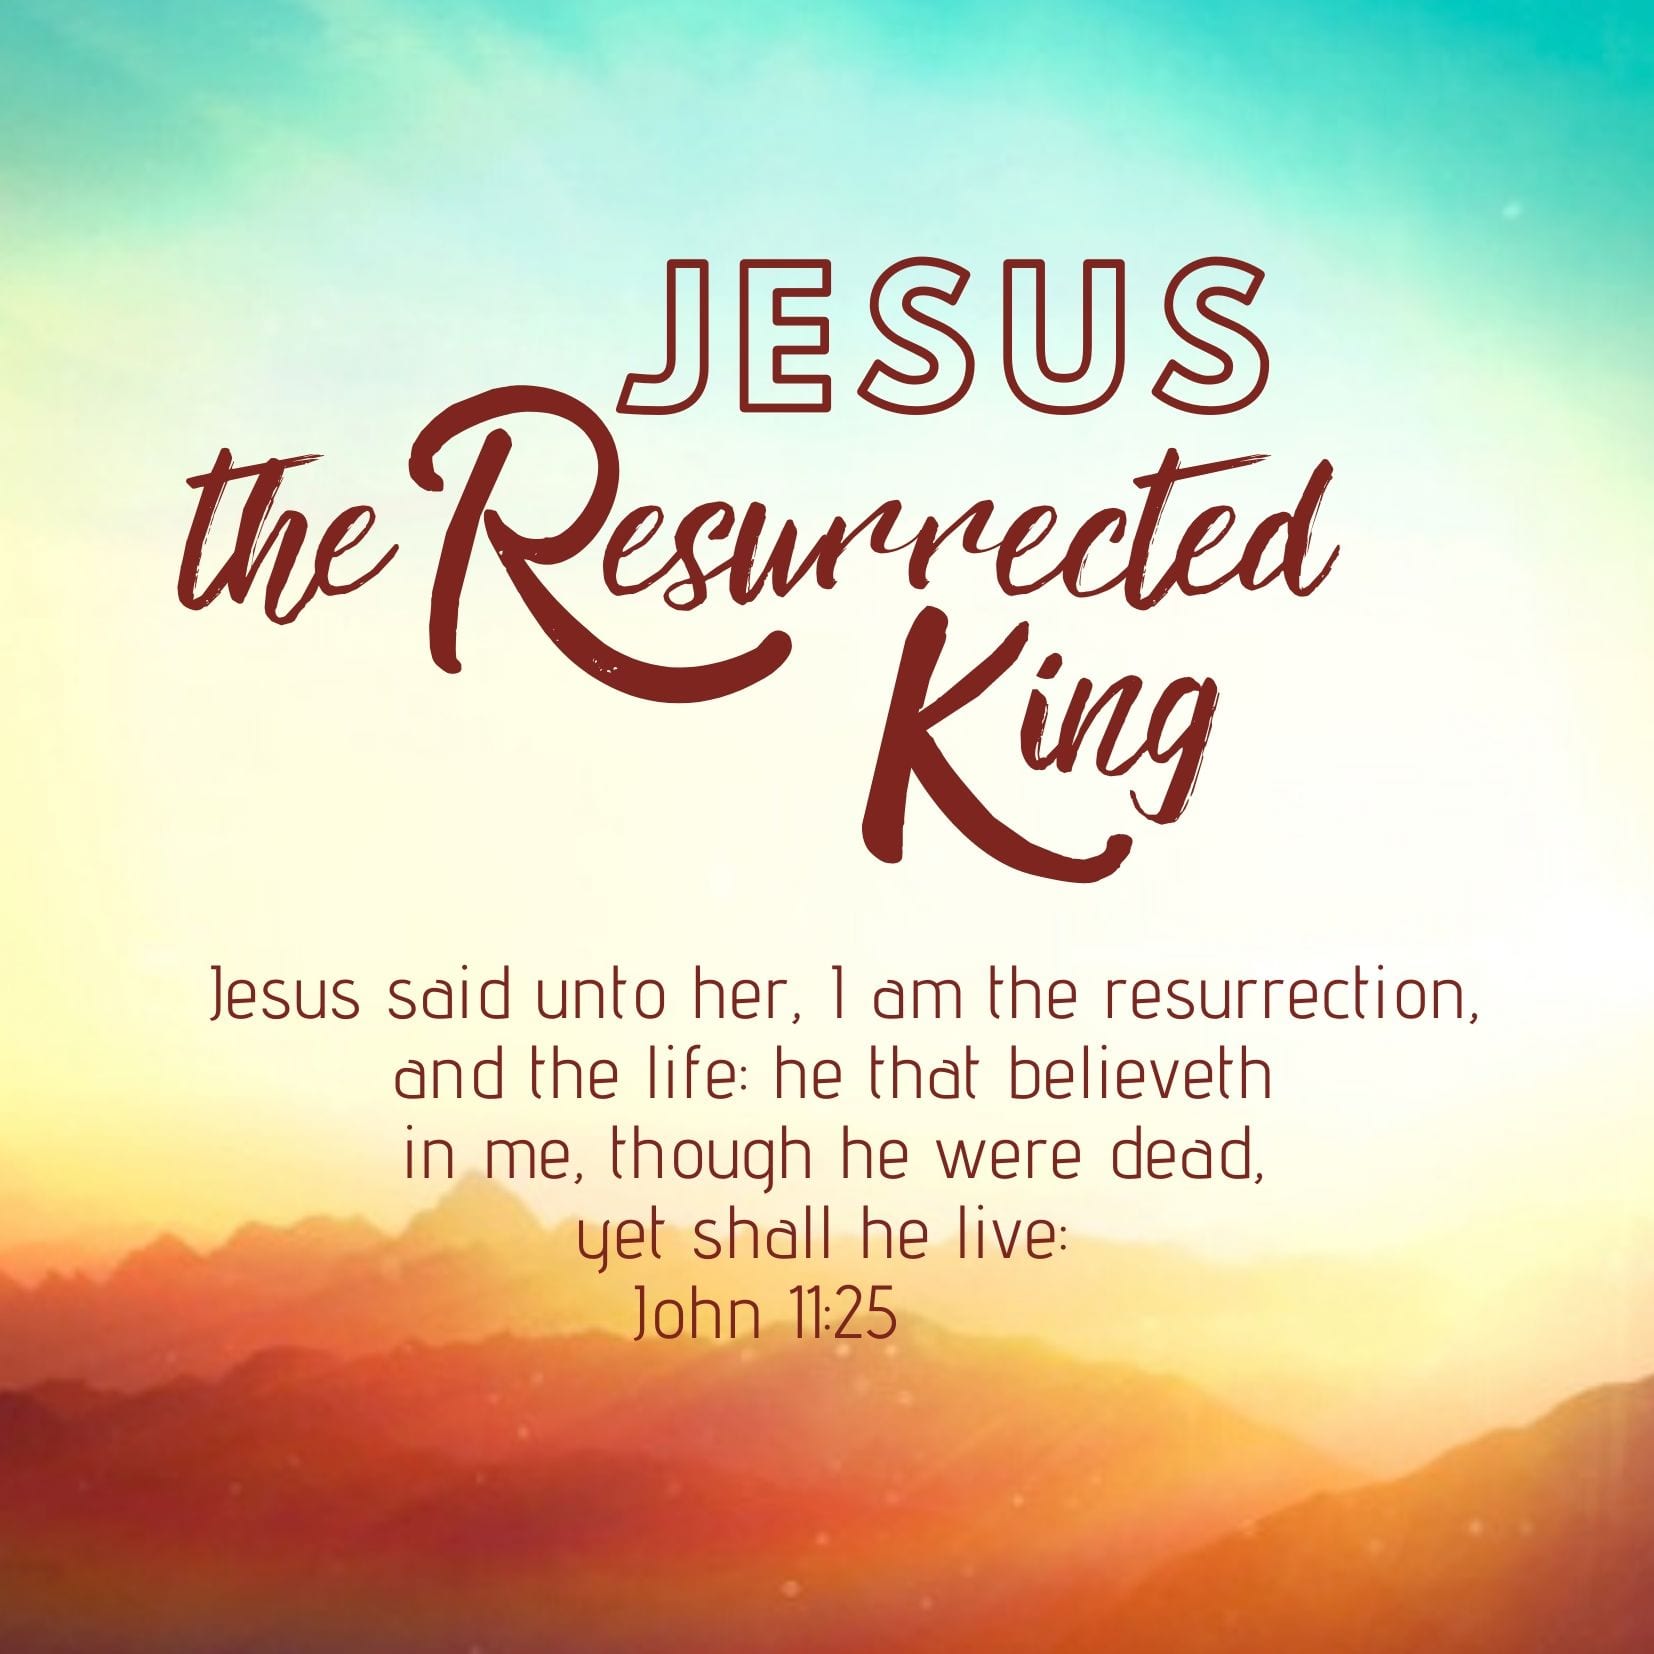 Easter Sunday “The Resurrected King”